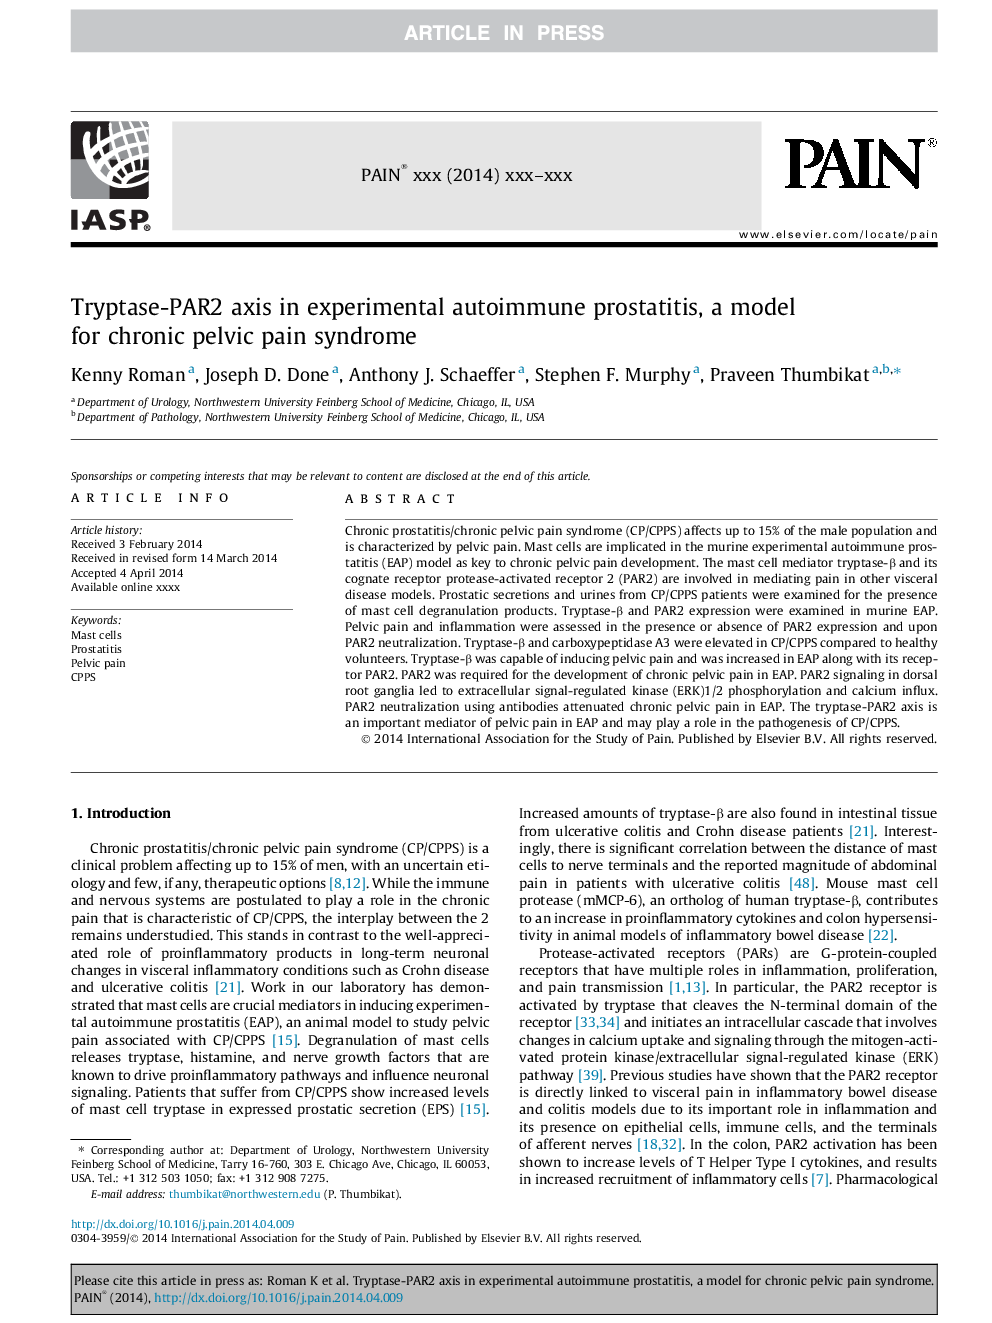 Tryptase-PAR2 axis in experimental autoimmune prostatitis, a model for chronic pelvic pain syndrome